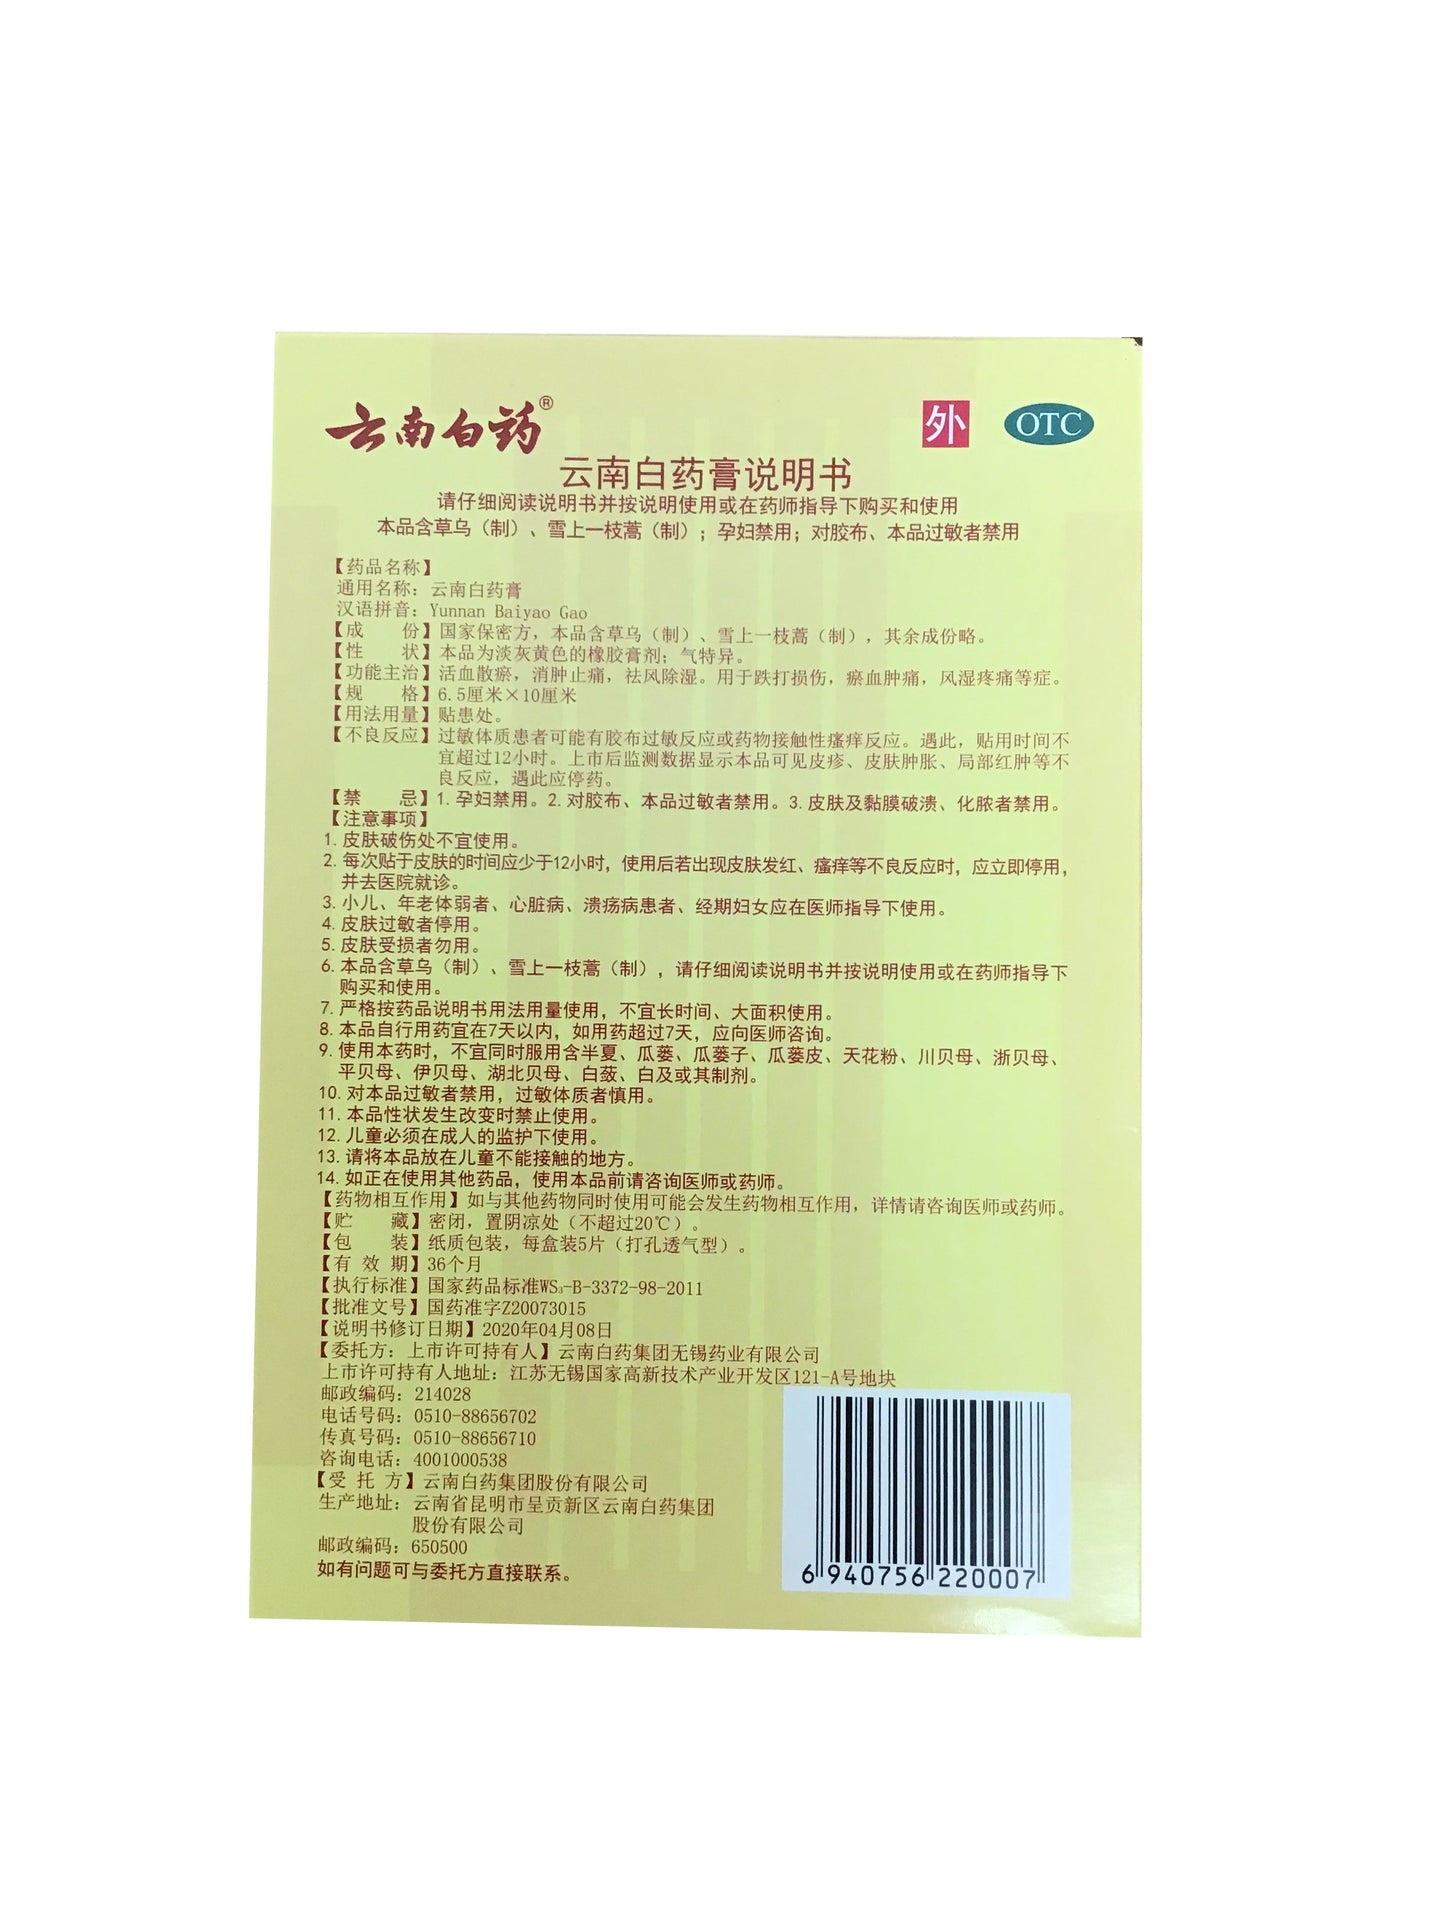 Yunnan Baiyao Plaster (5 Patches) 云南白药膏 (5贴装）